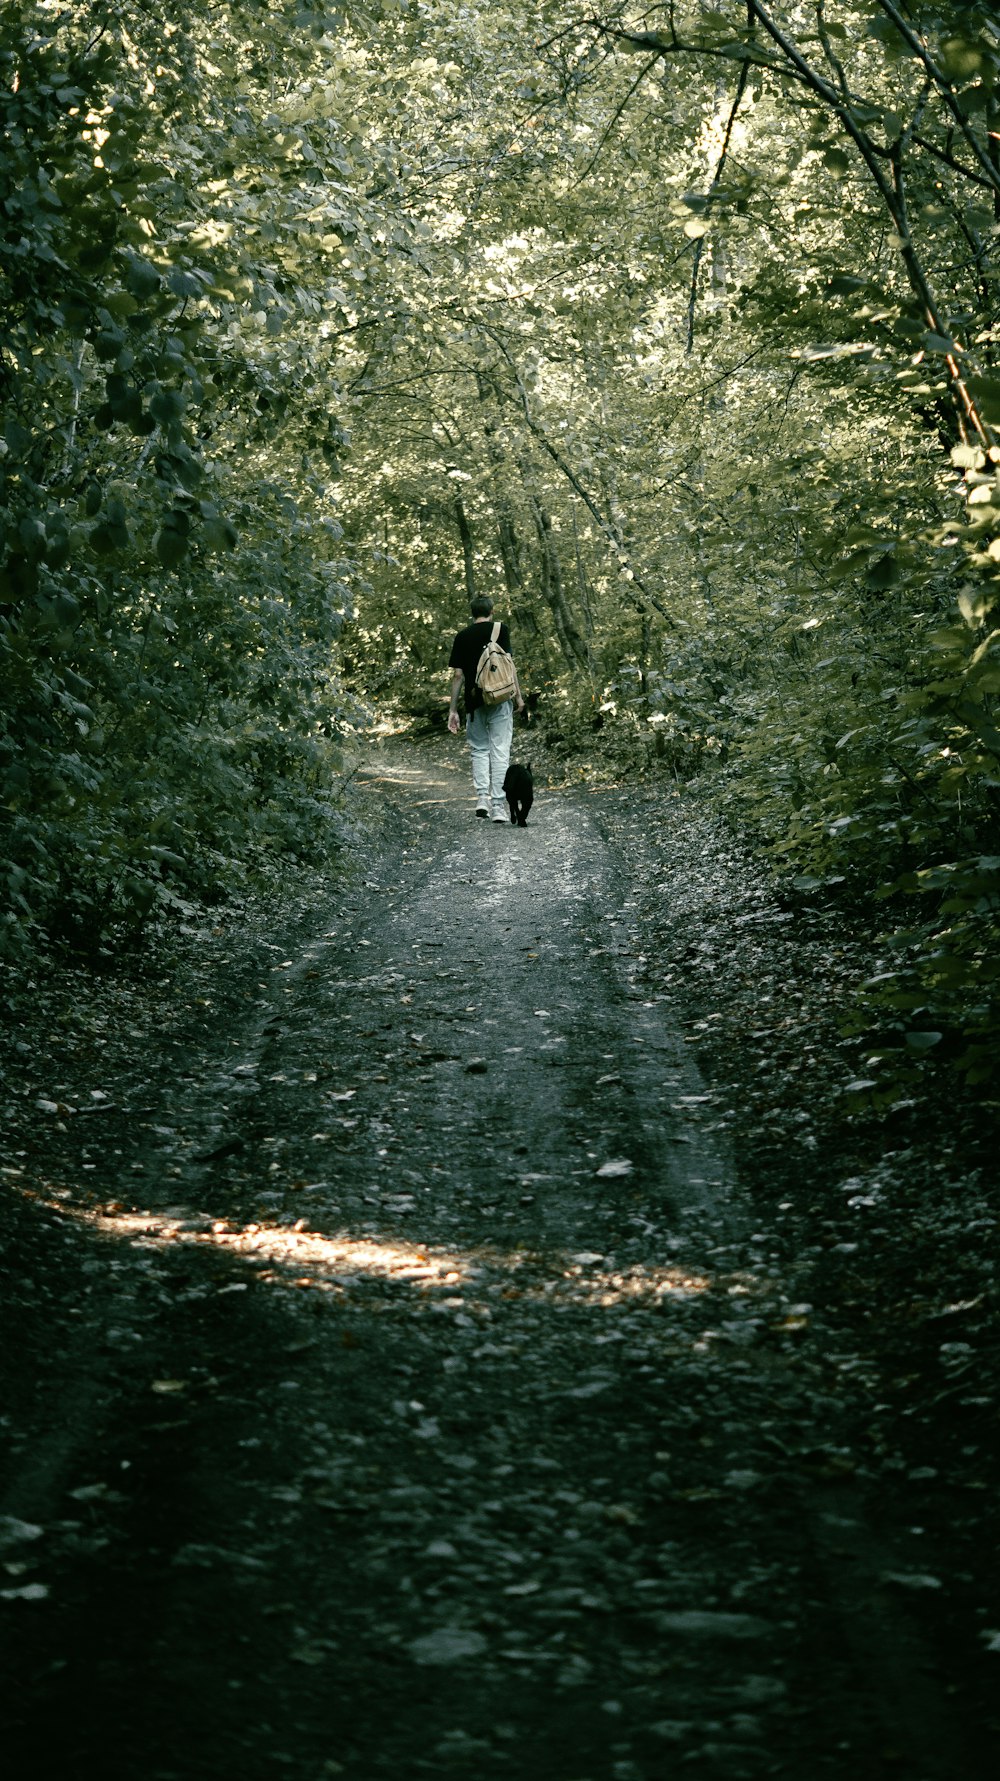 woman in white shirt walking on pathway between green trees during daytime